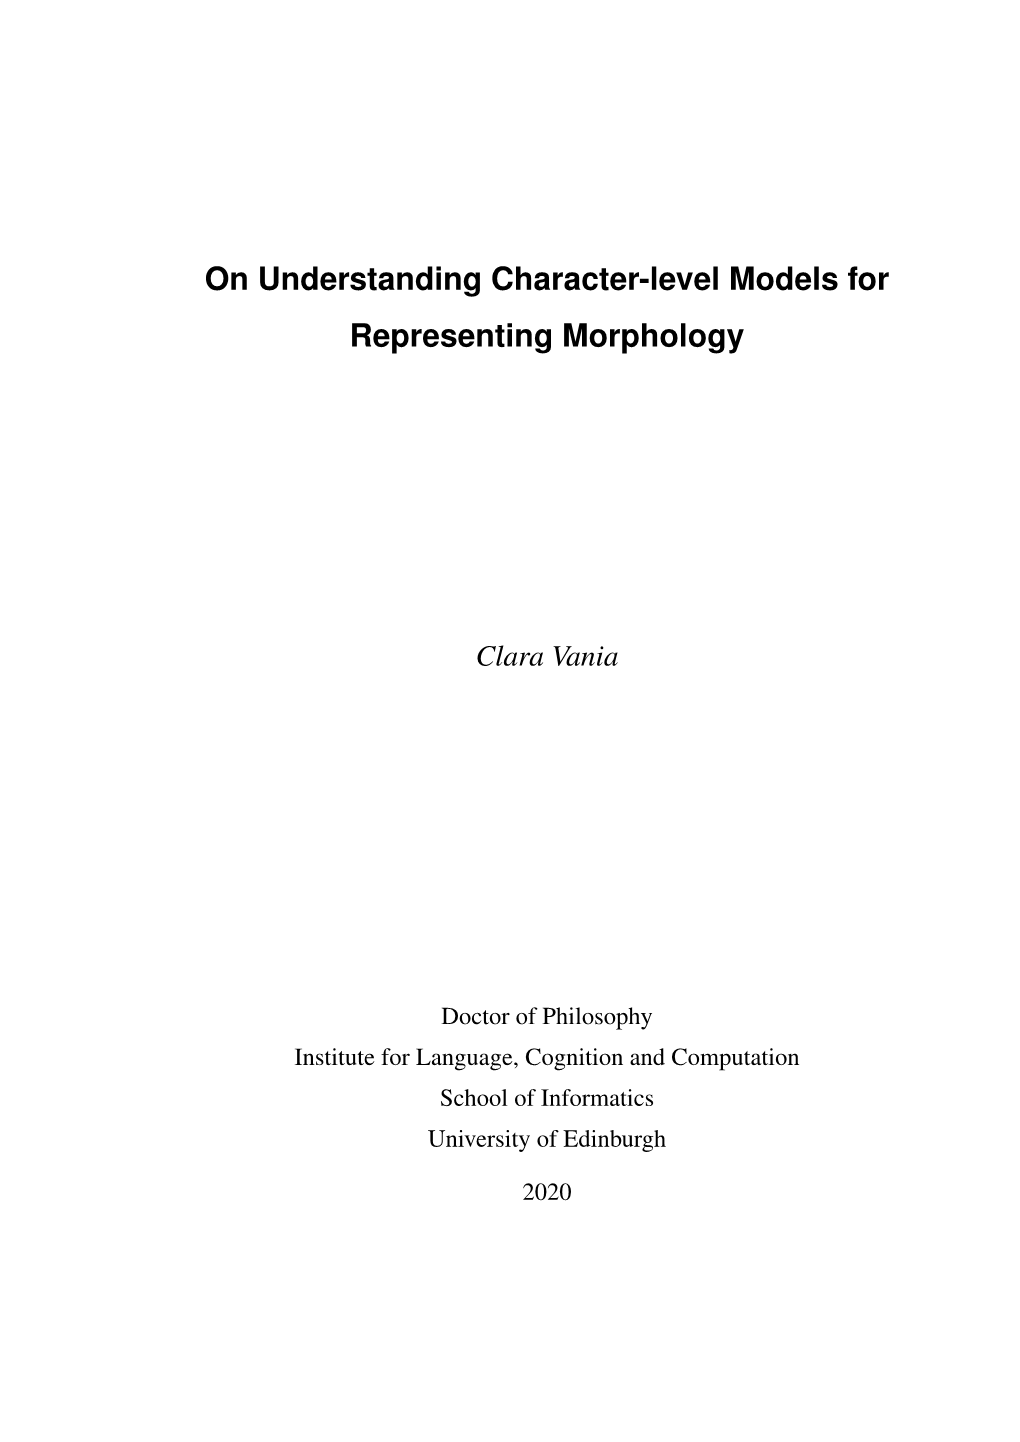 On Understanding Character-Level Models for Representing Morphology